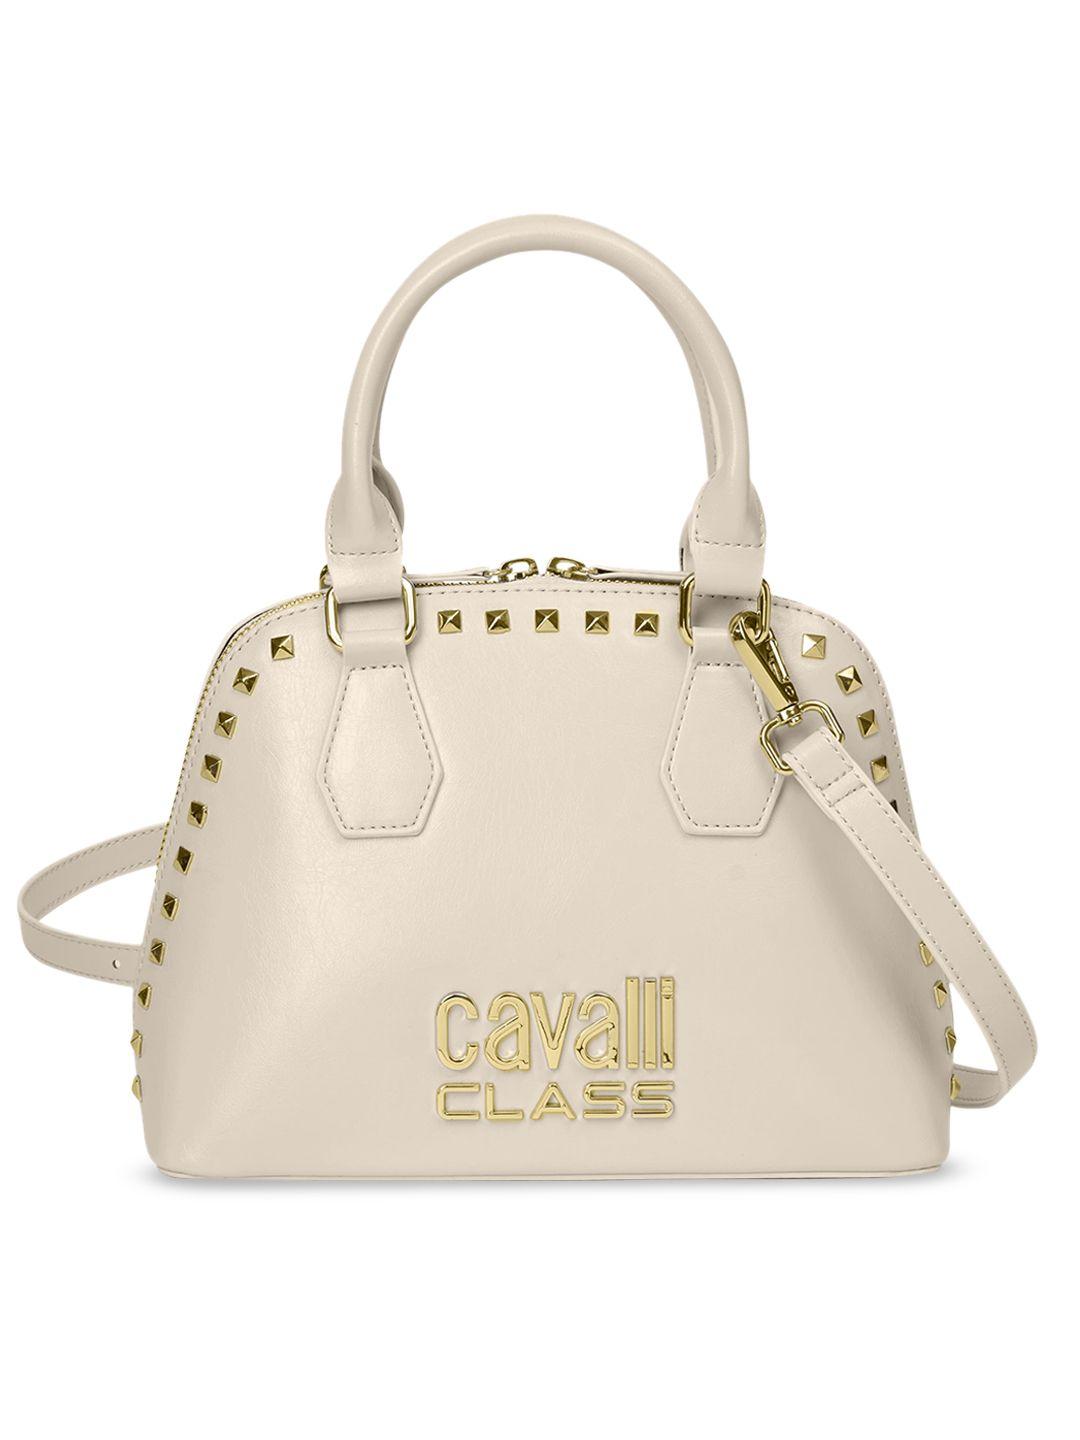 cavalli class embellished structured handheld bag